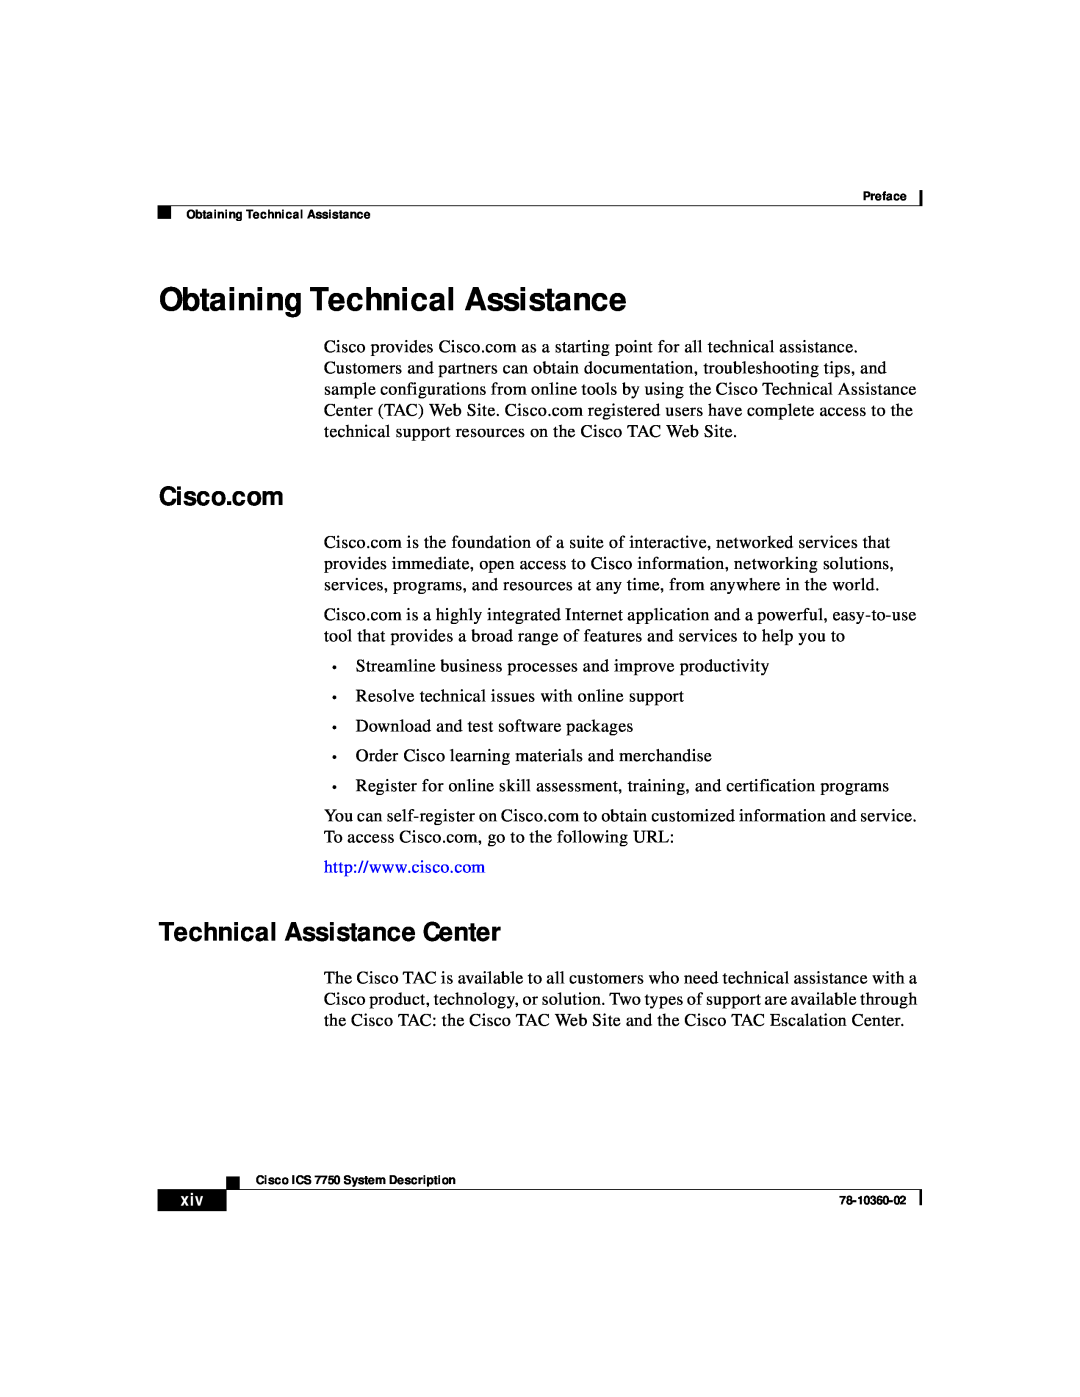 Cisco Systems ICS-7750 manual Obtaining Technical Assistance, Cisco.com, Technical Assistance Center 